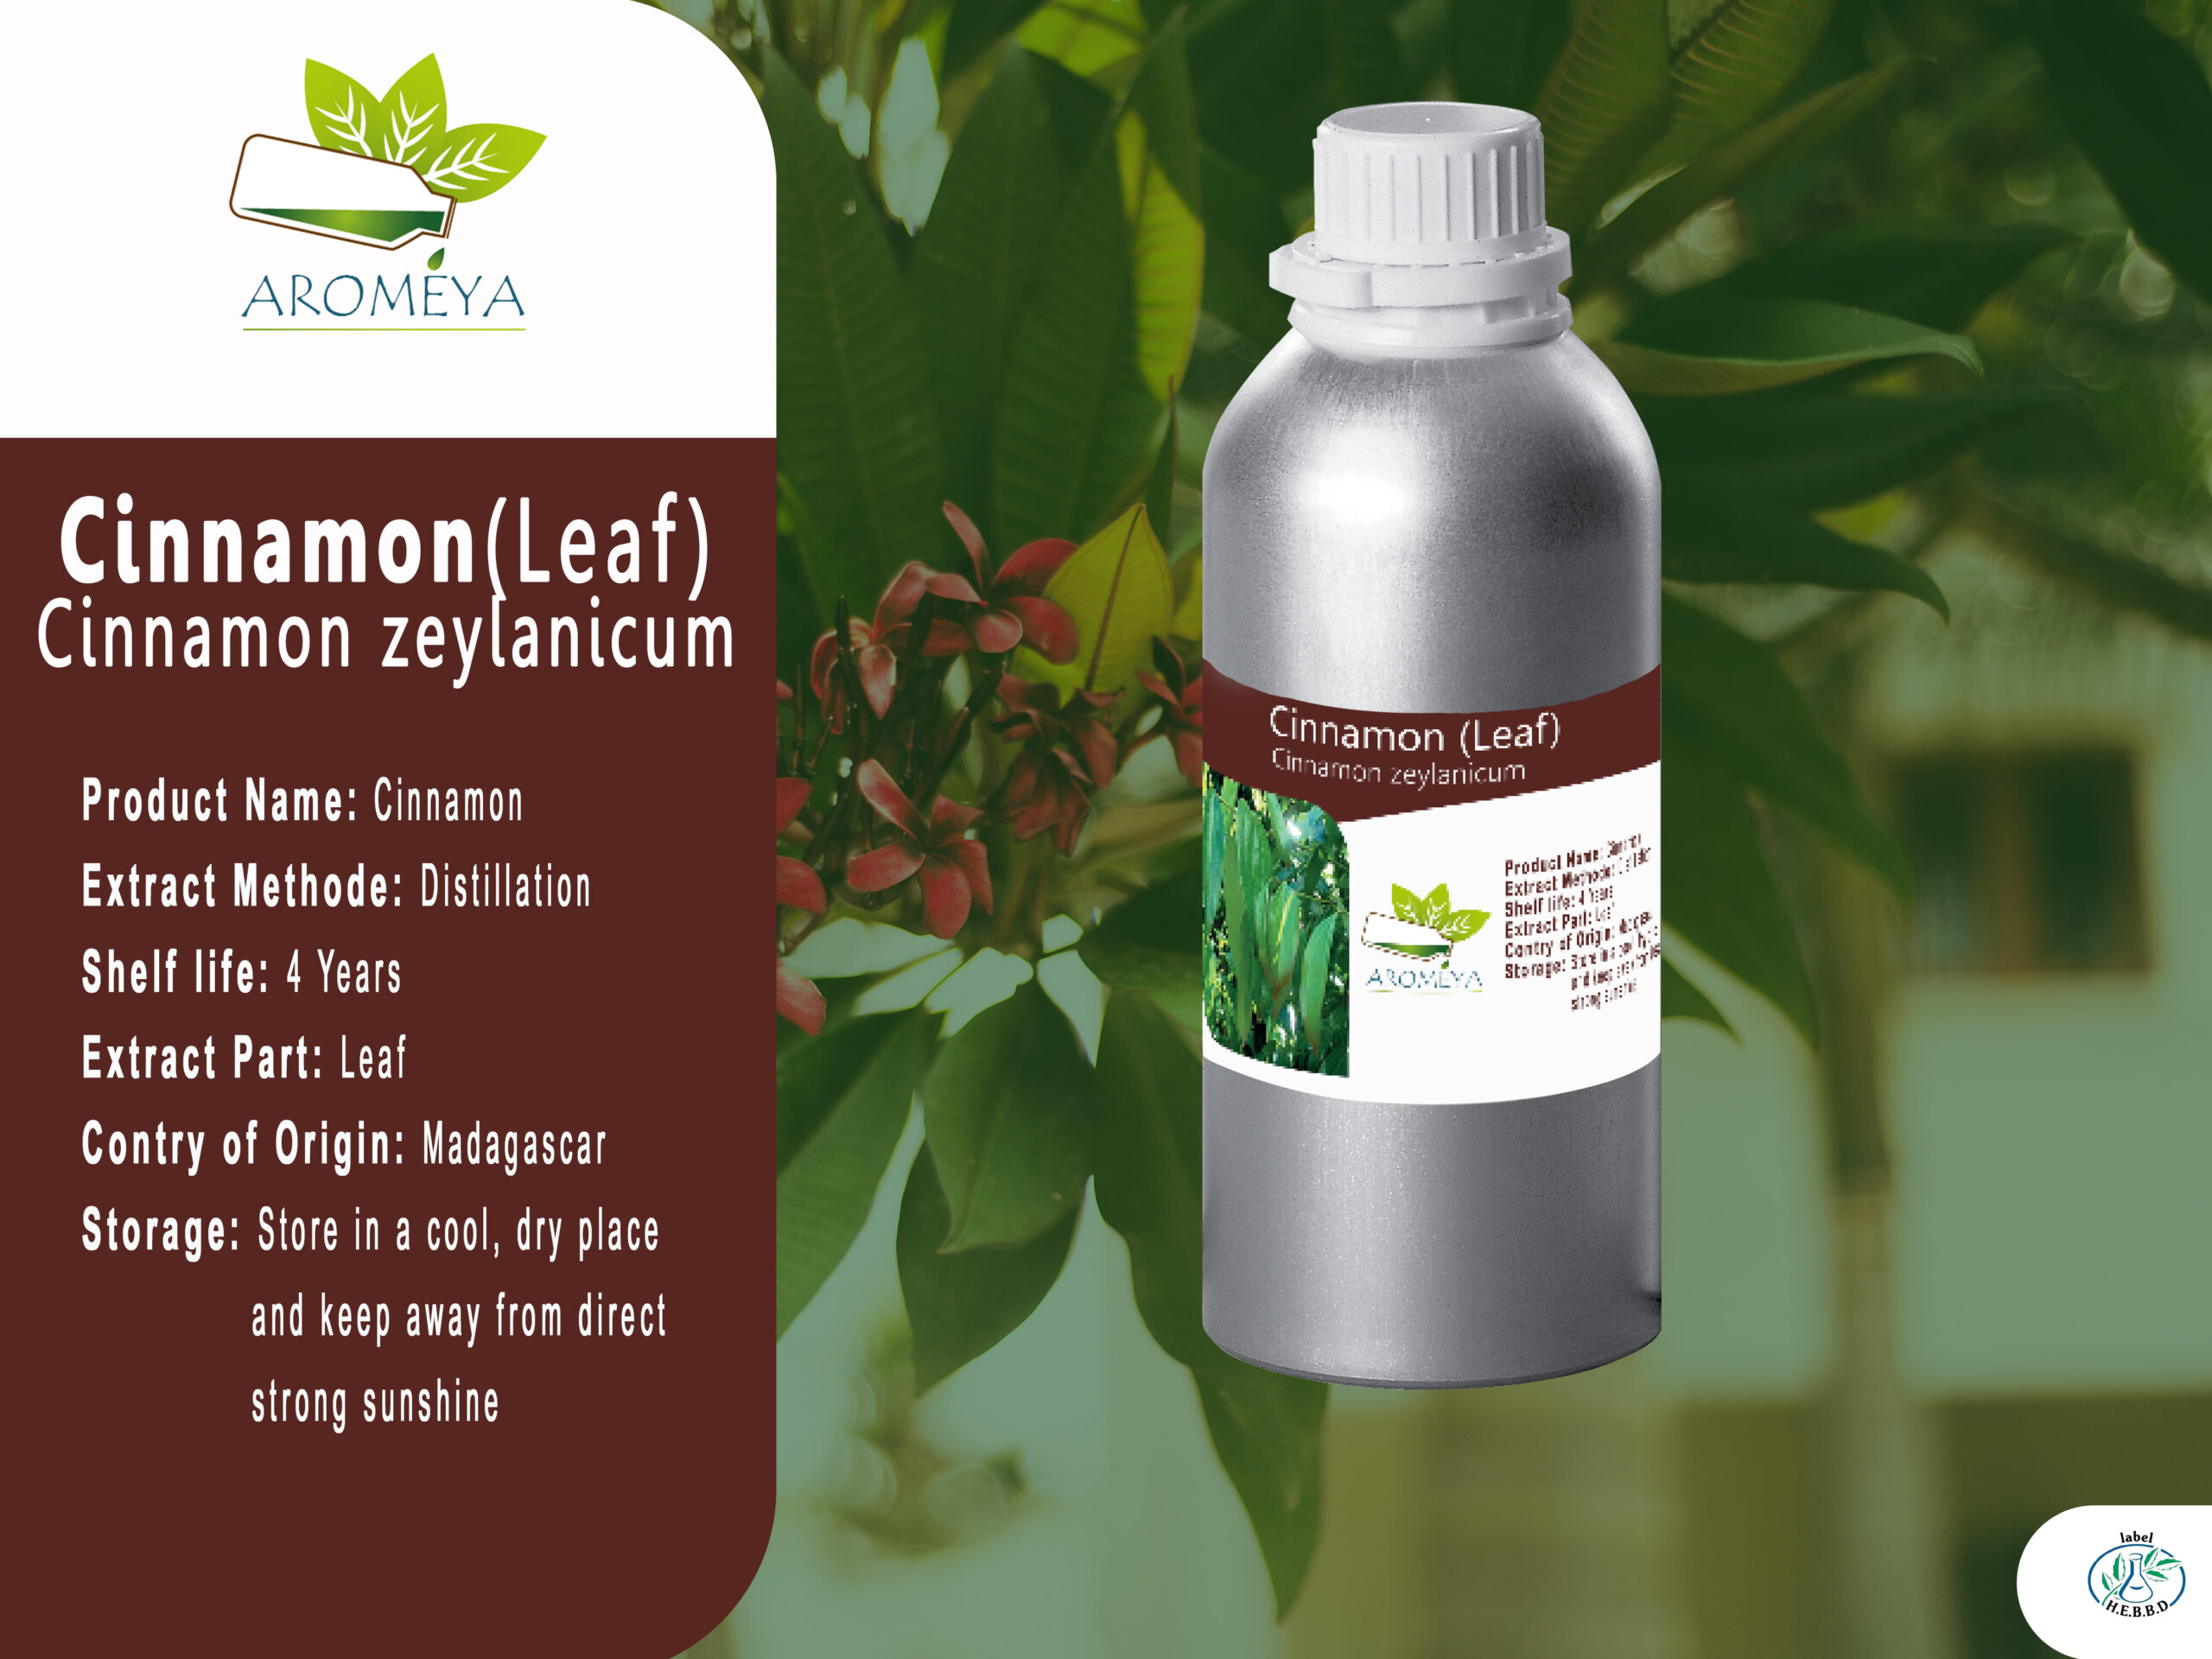 Huile essentielle de Cannelle feuille // Cinnamon leaf essential oil from Madagascar